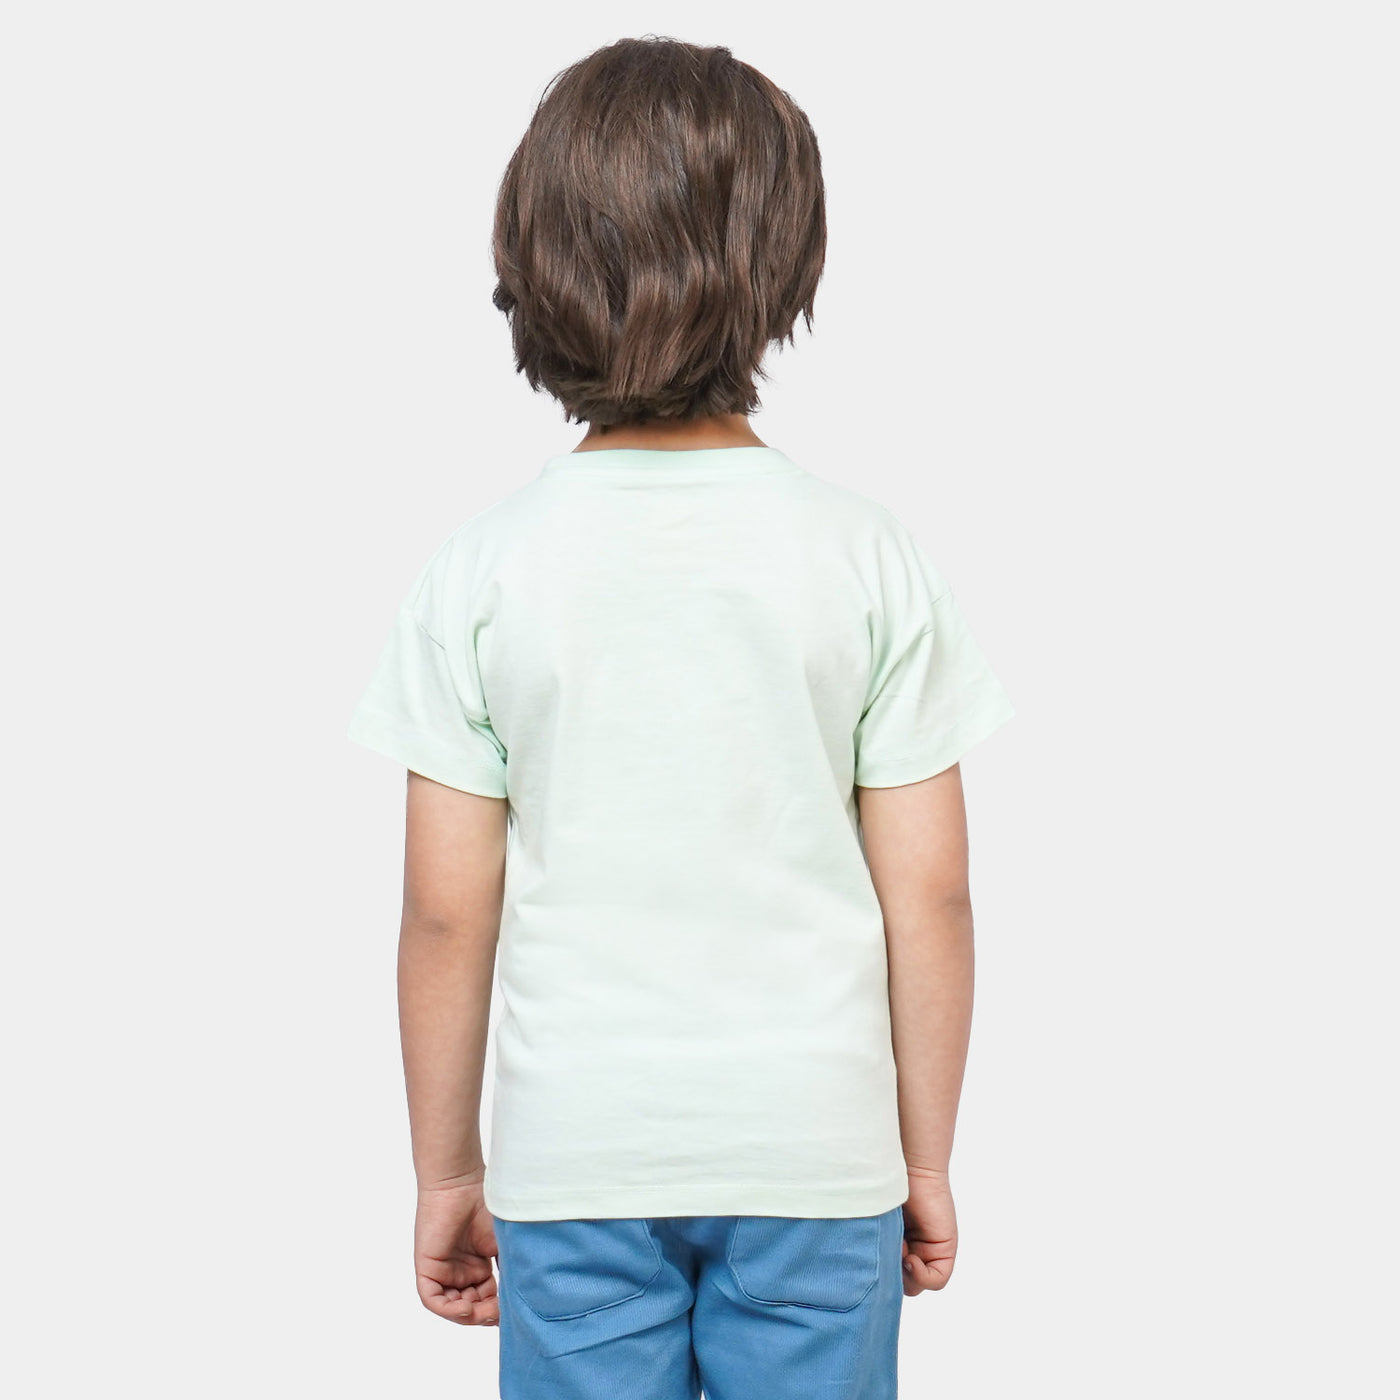 Boys Cotton T-Shirt Million Years - Sea Green